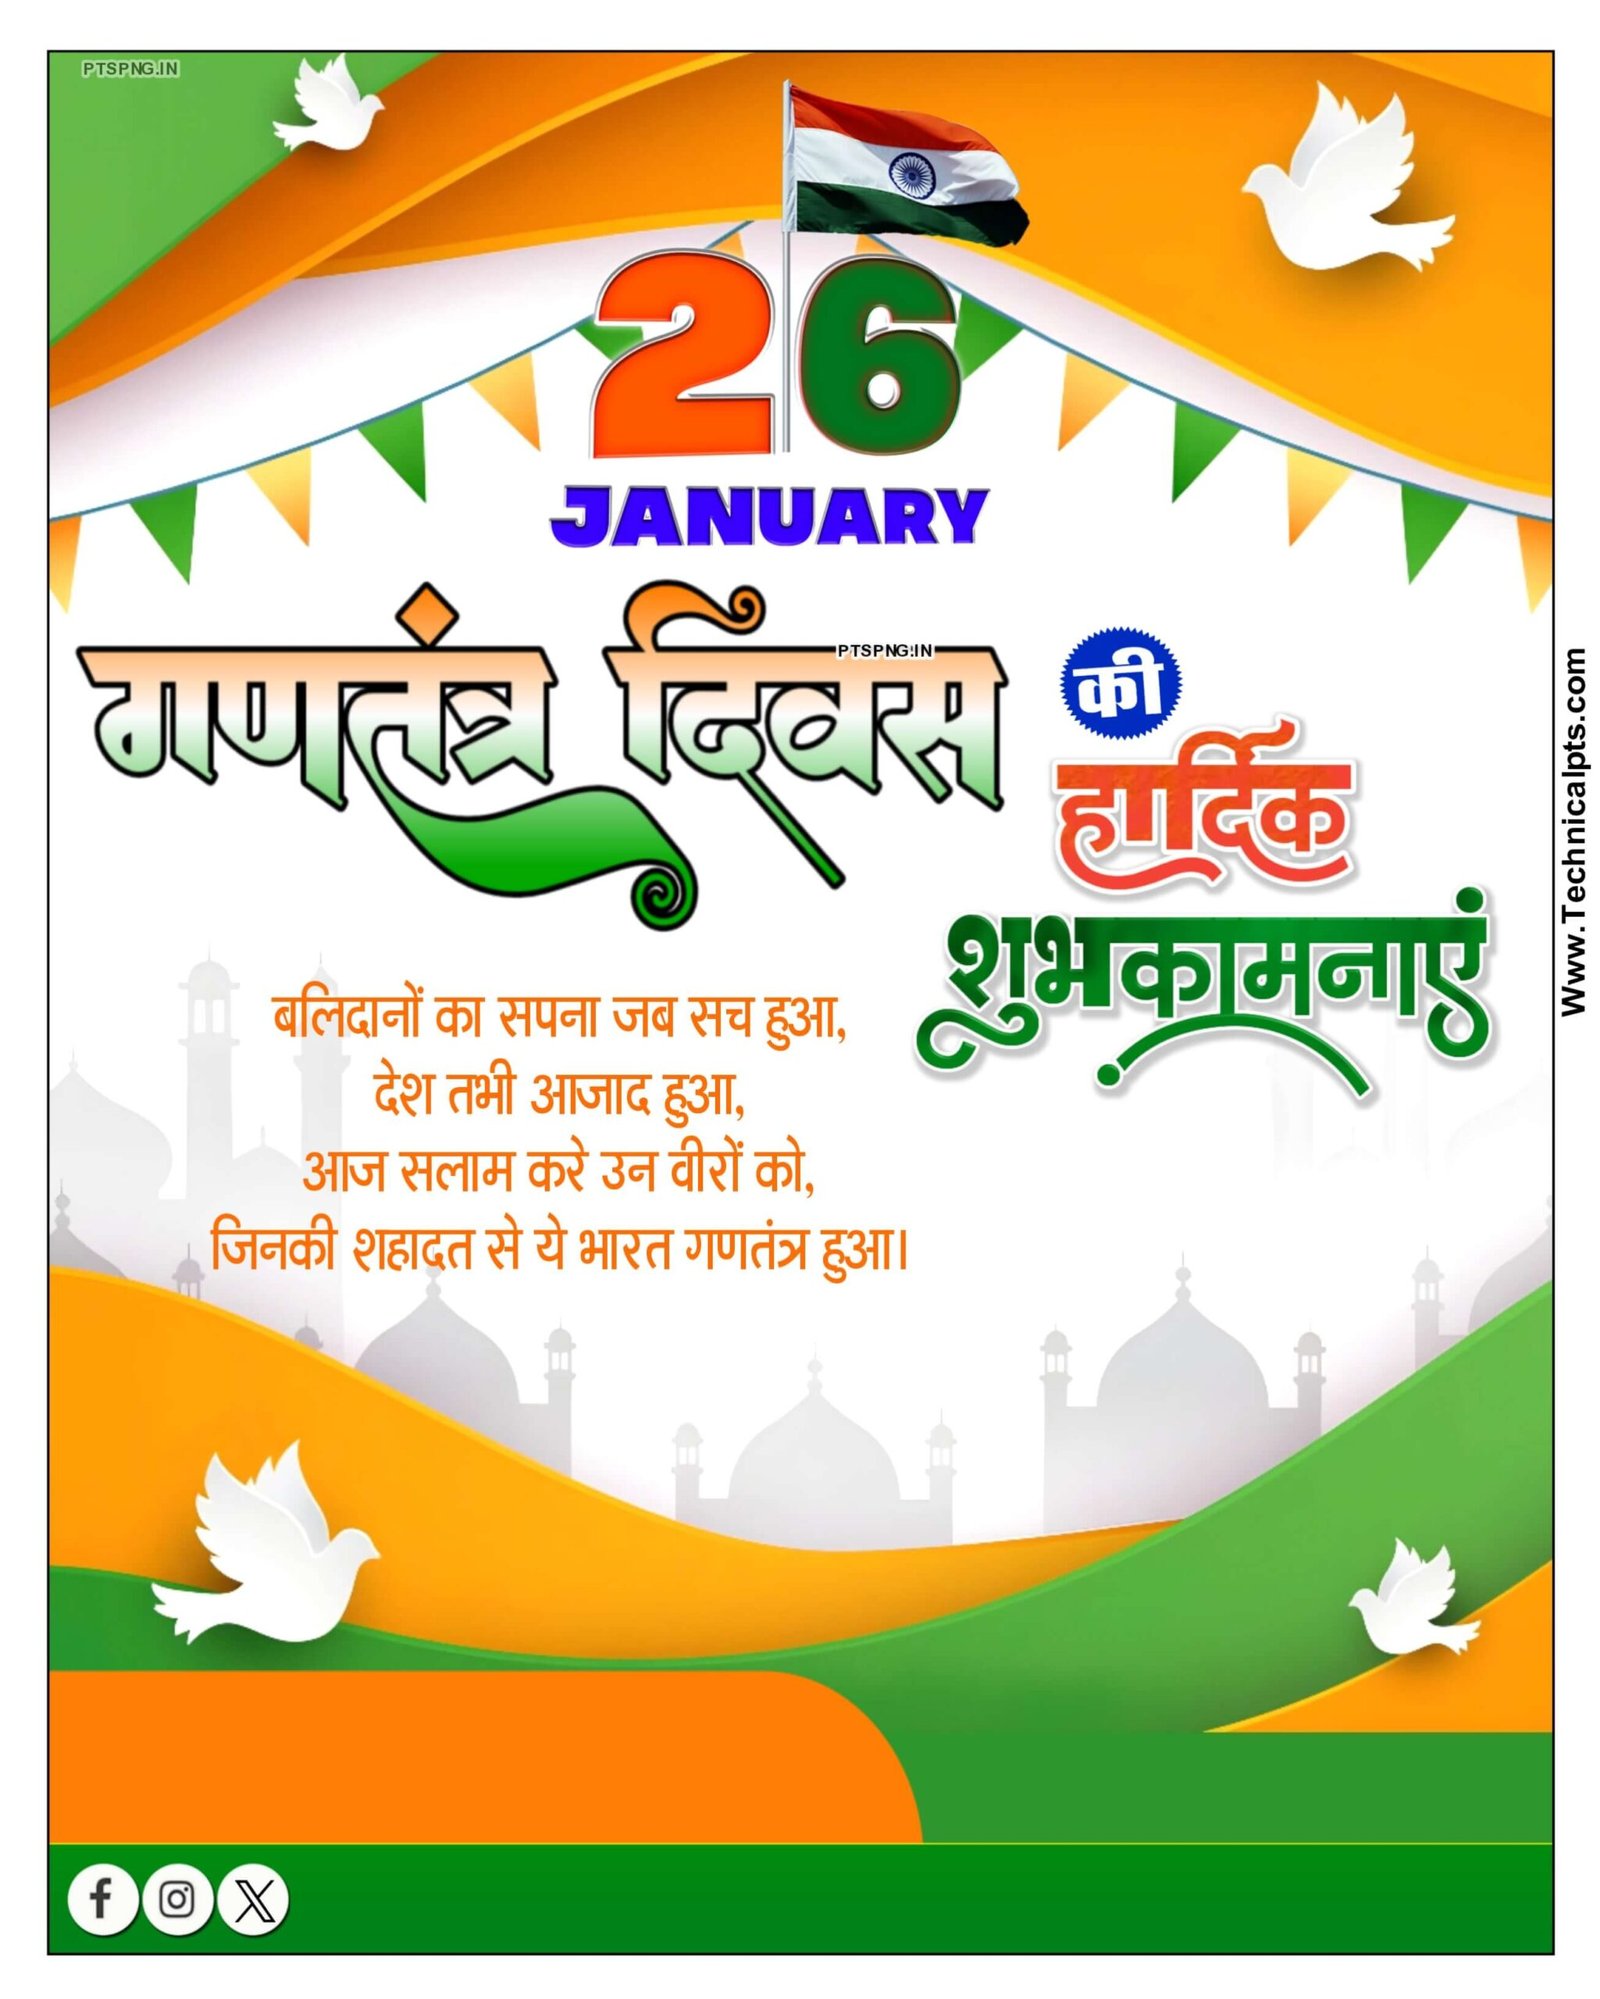 Mobile se 26 January ka poster banana sikhen| Ganatantra Divas ka poster Kaise banaen| 26 January PNG background download